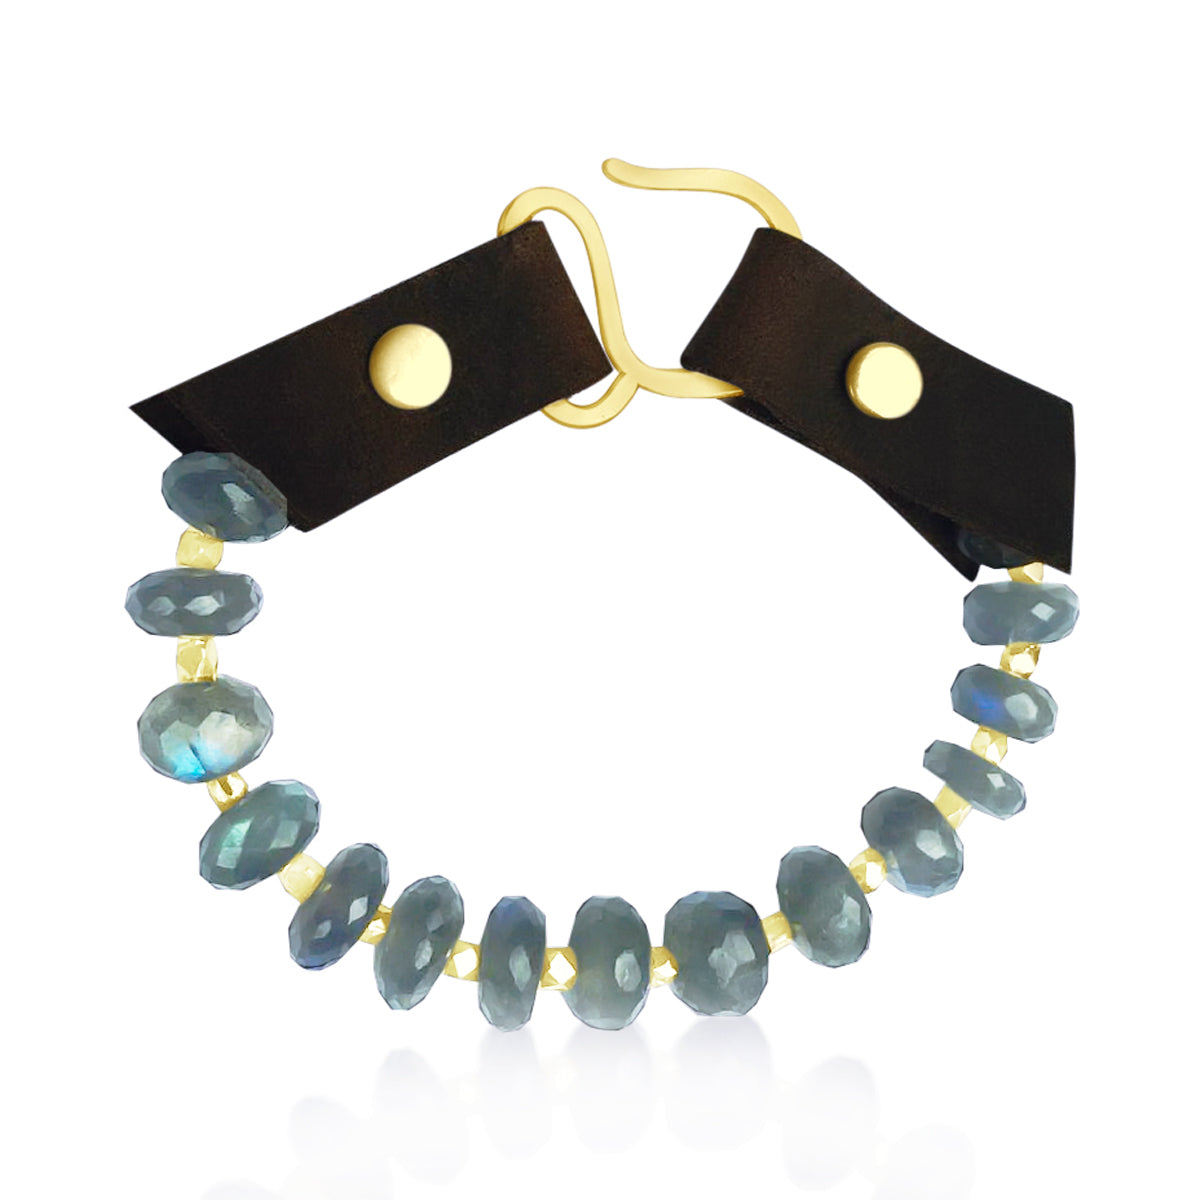 Serenity Statement Jewelry: Labradorite, Leather Prayer Bracelet